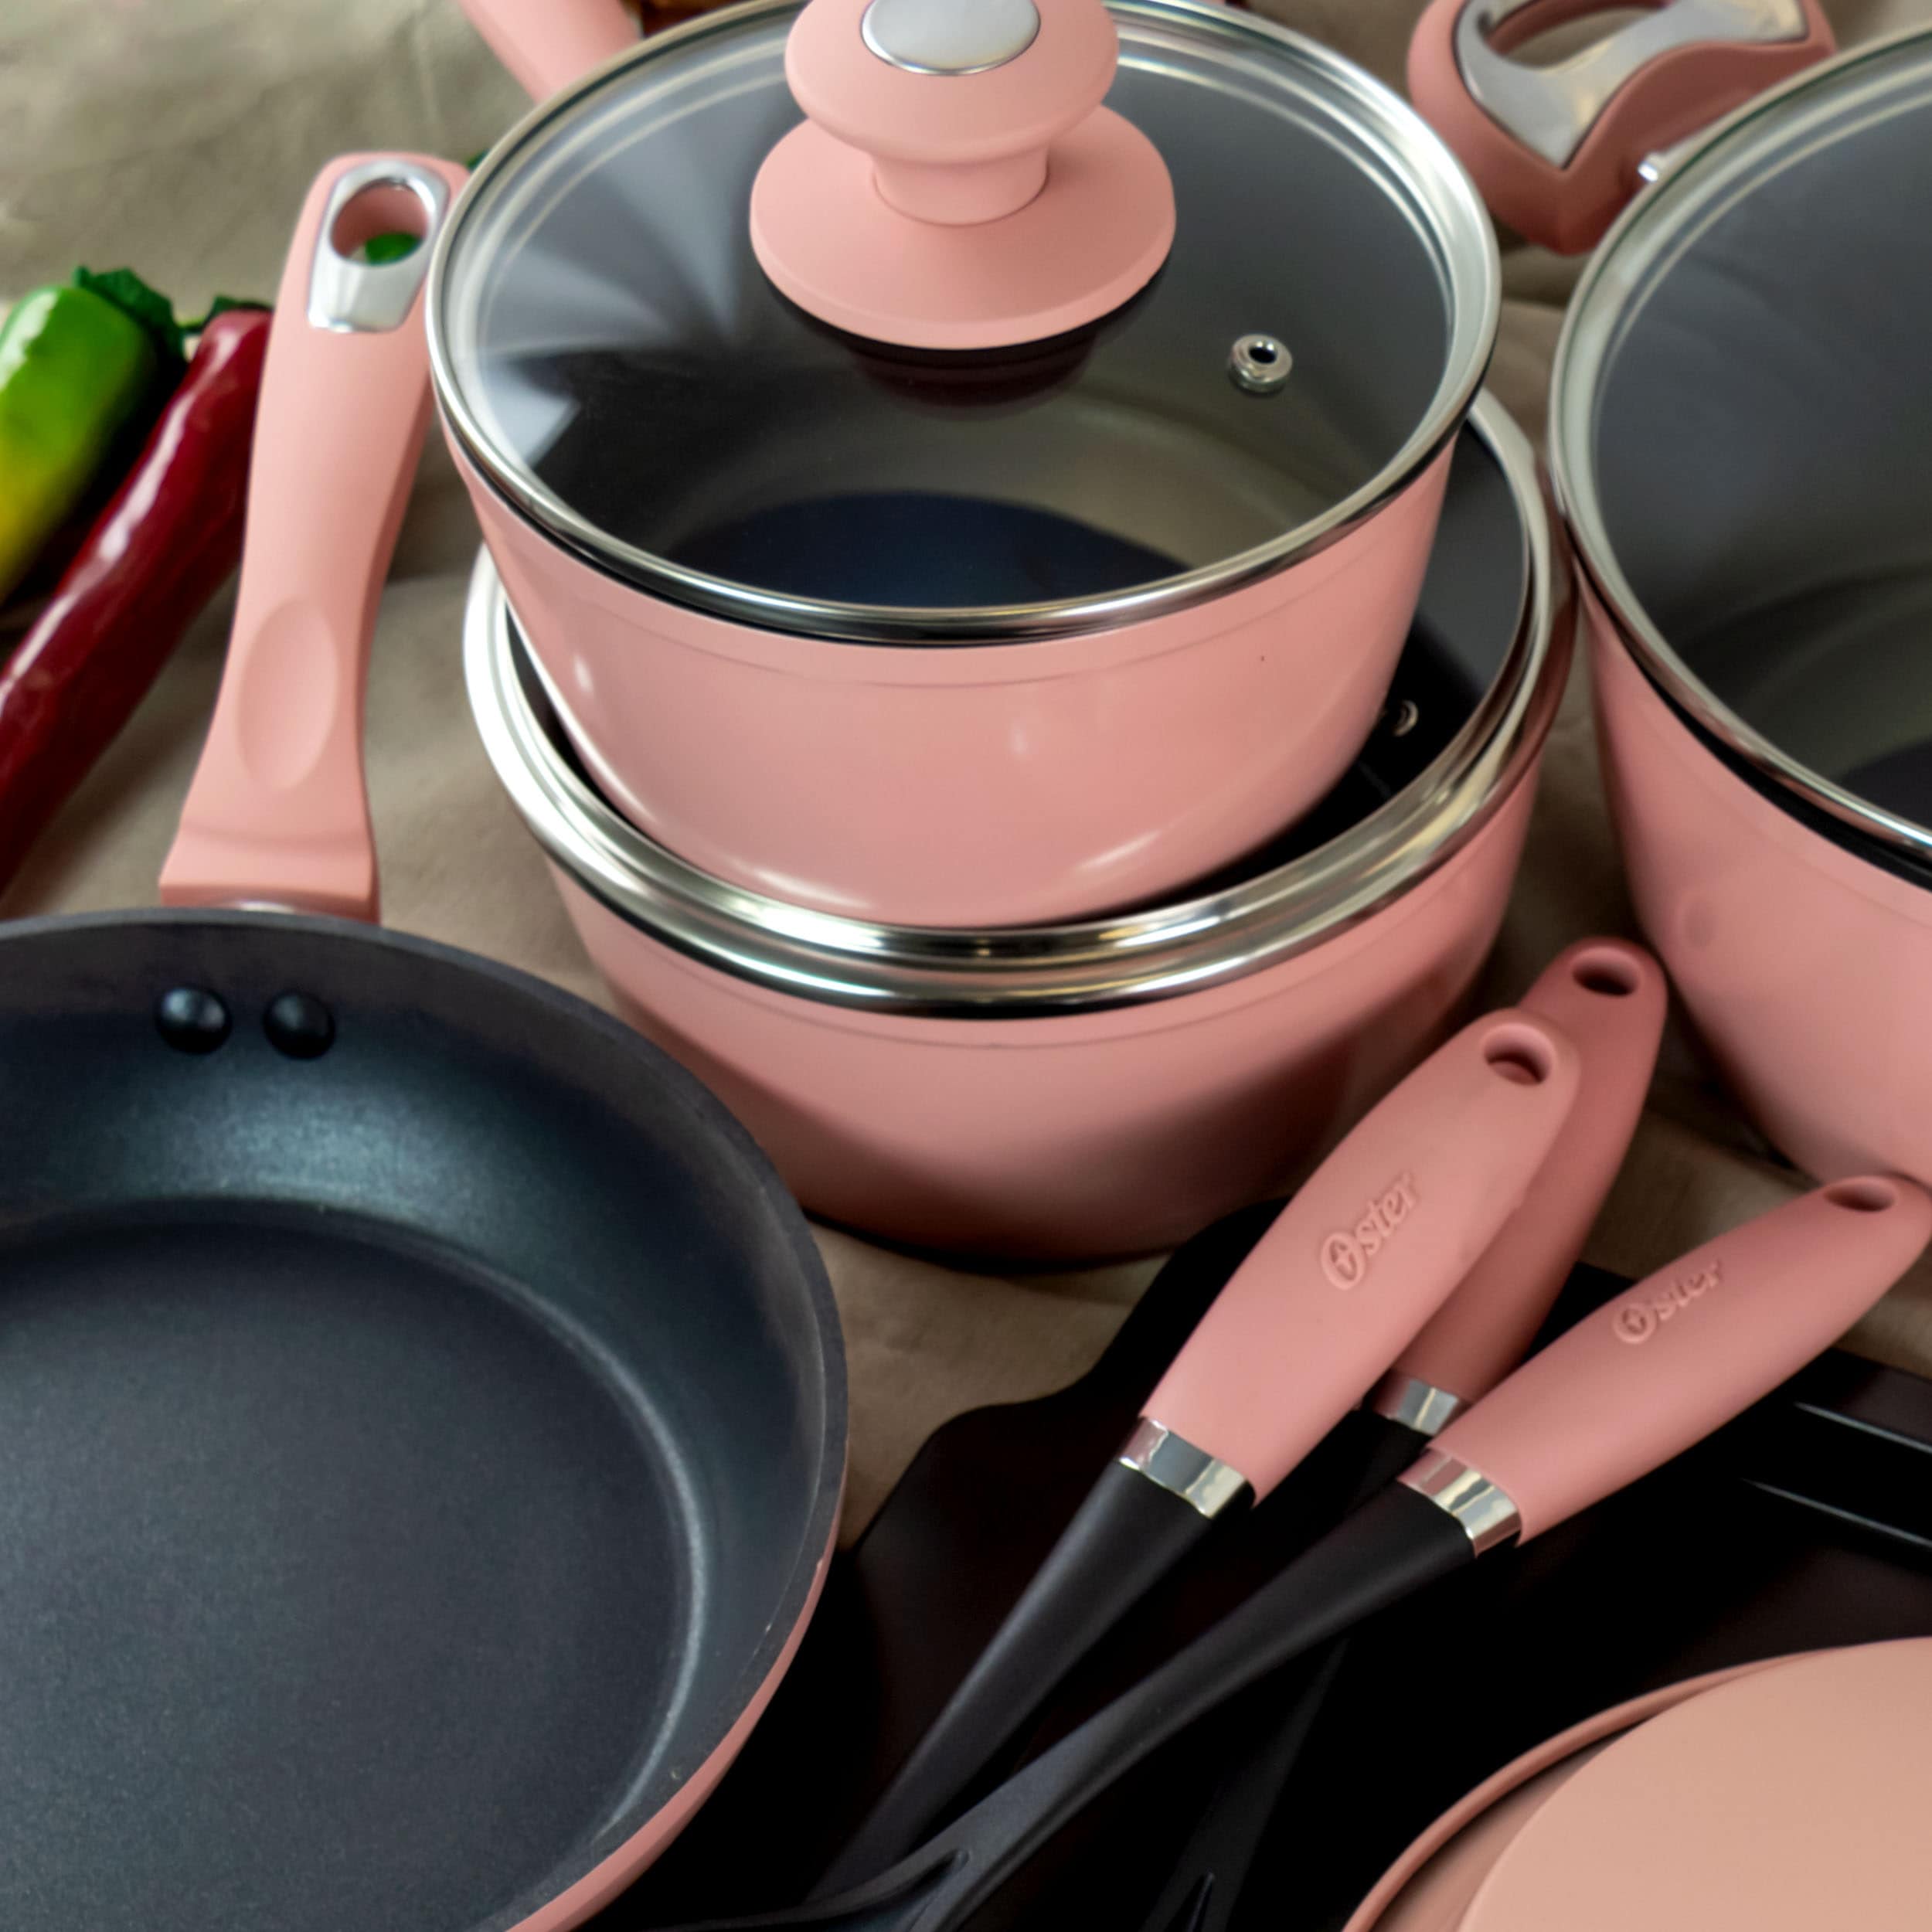  AHEIM Pots and Pans Set, Aluminum Nonstick Cookware